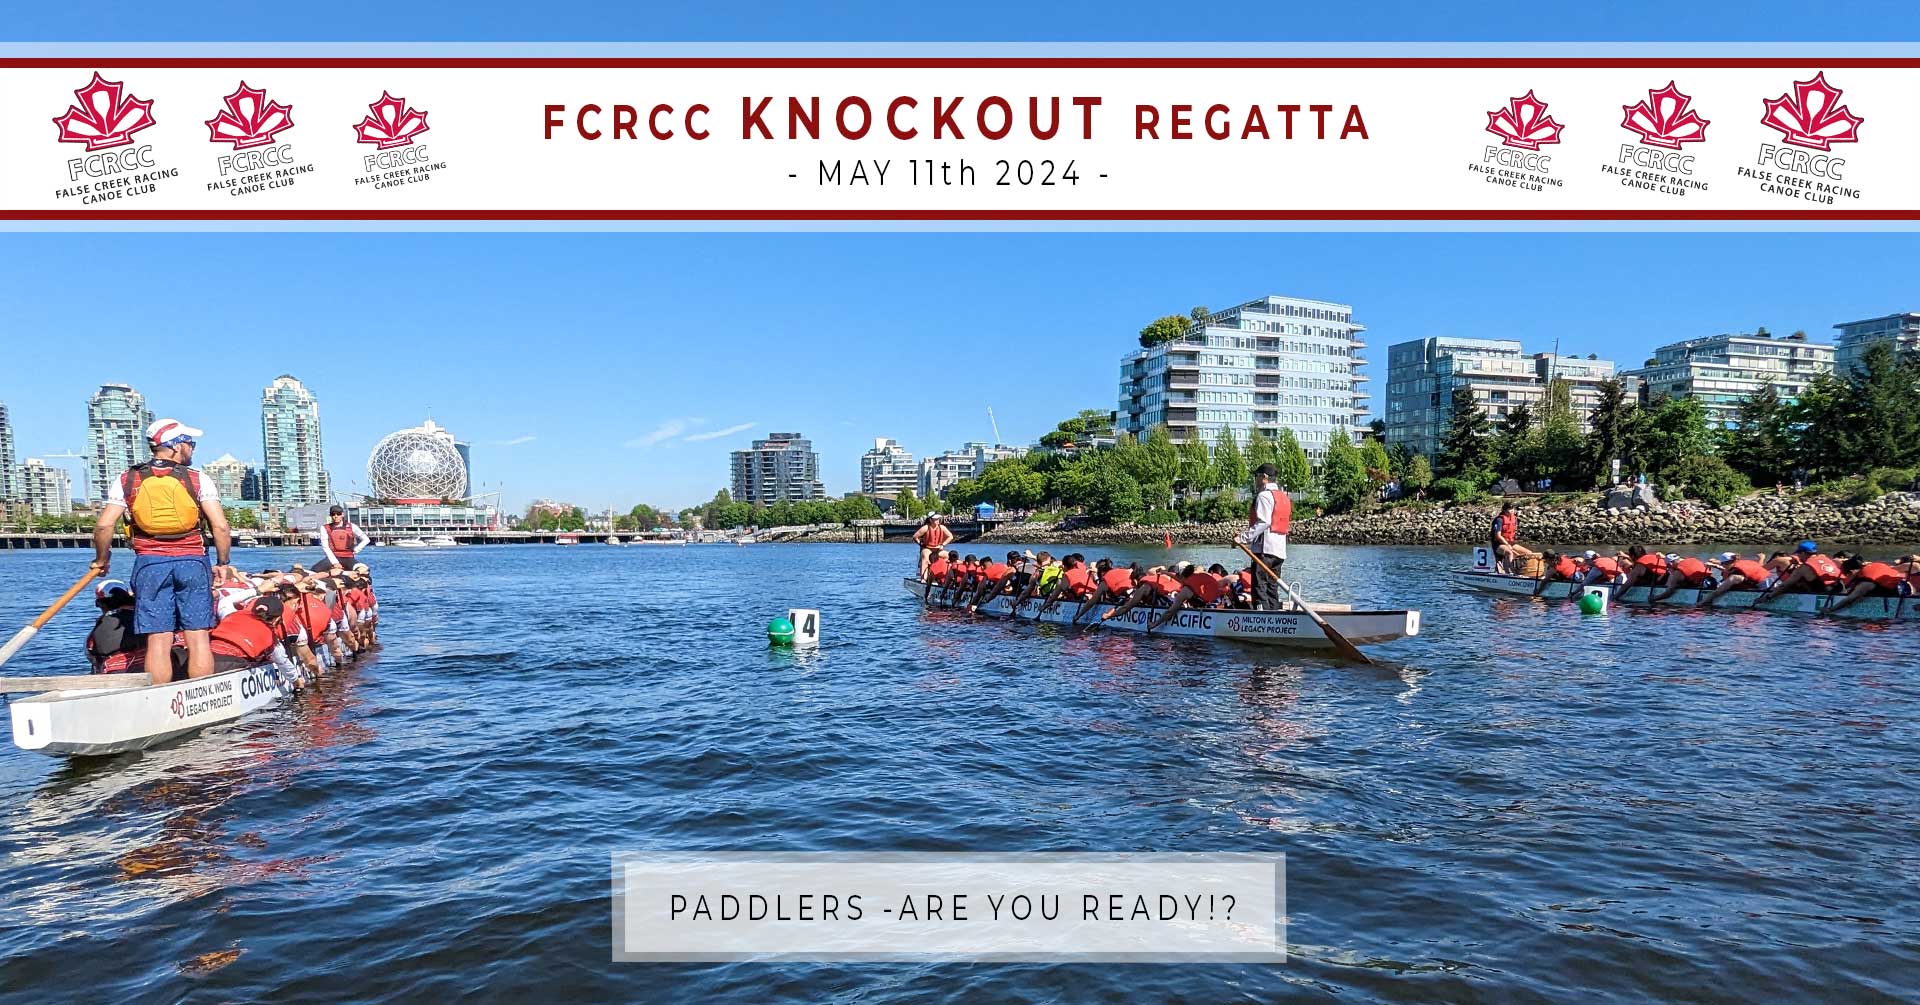 FCRCC Knockout Dragon Boat Regatta 2024 - May 11th, 2024